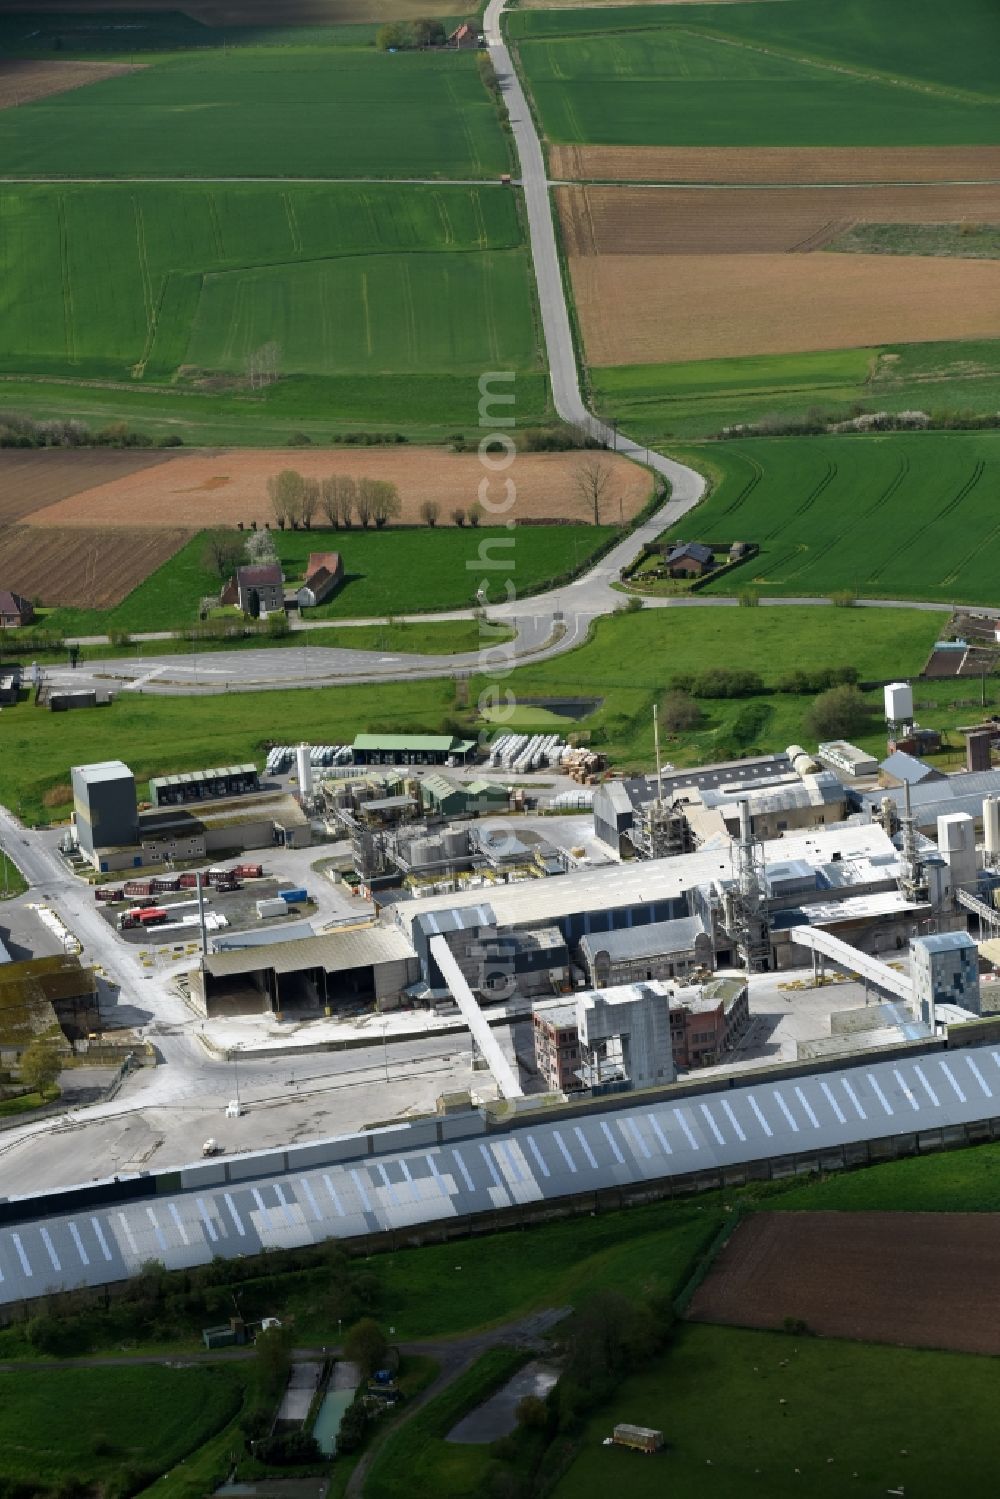 Aerial photograph Frasnes-lez-Anvaing - Building and production halls on the premises of Rosier in Frasnes-lez-Anvaing in Region wallonne, Belgium